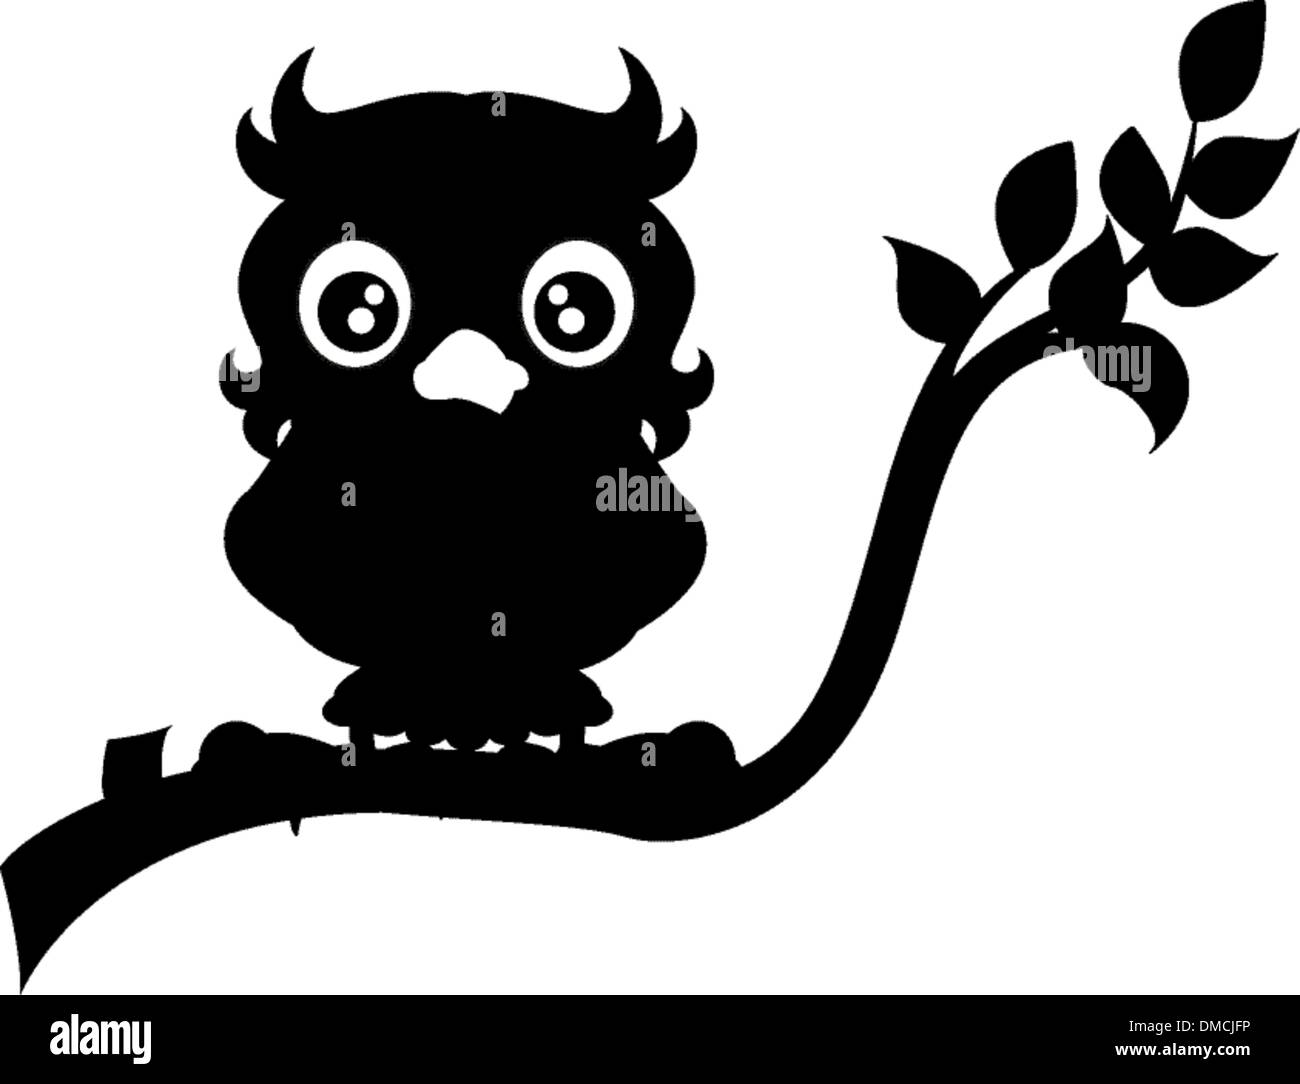 owl cartoon silhouette Stock Vector